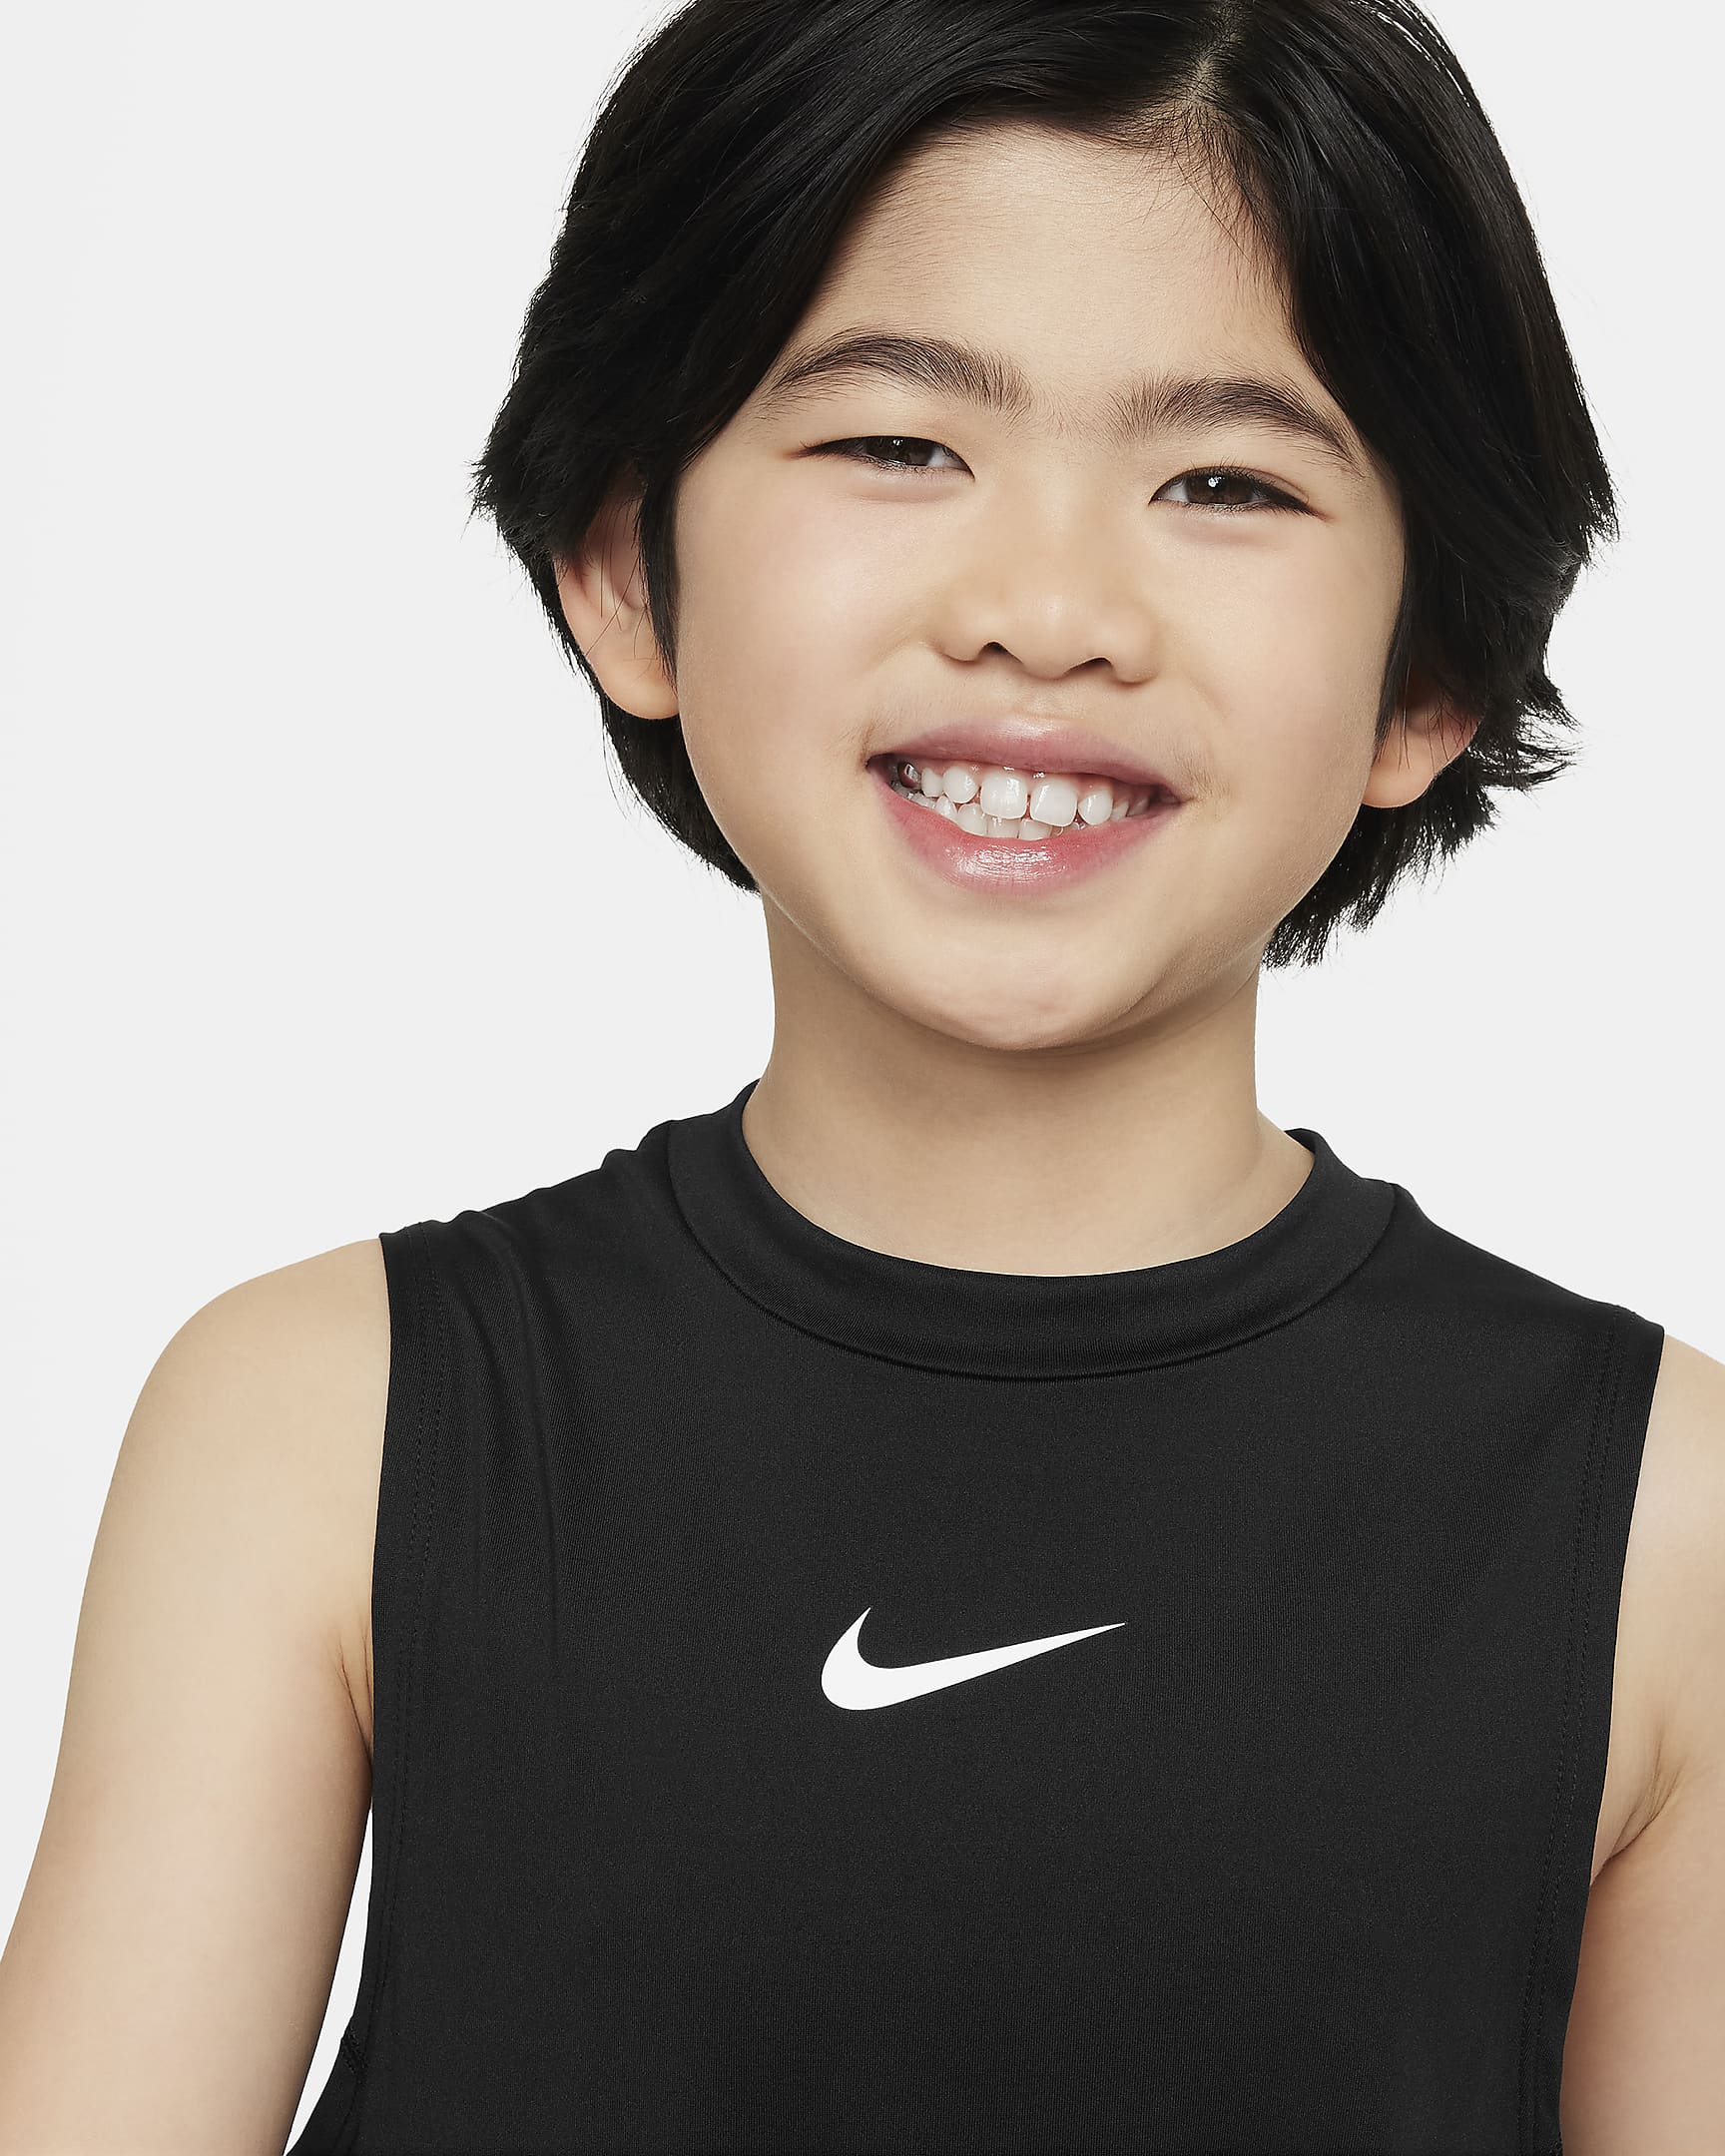 Nike Pro Older Kids' (Boys') Sleeveless Top - Black/White